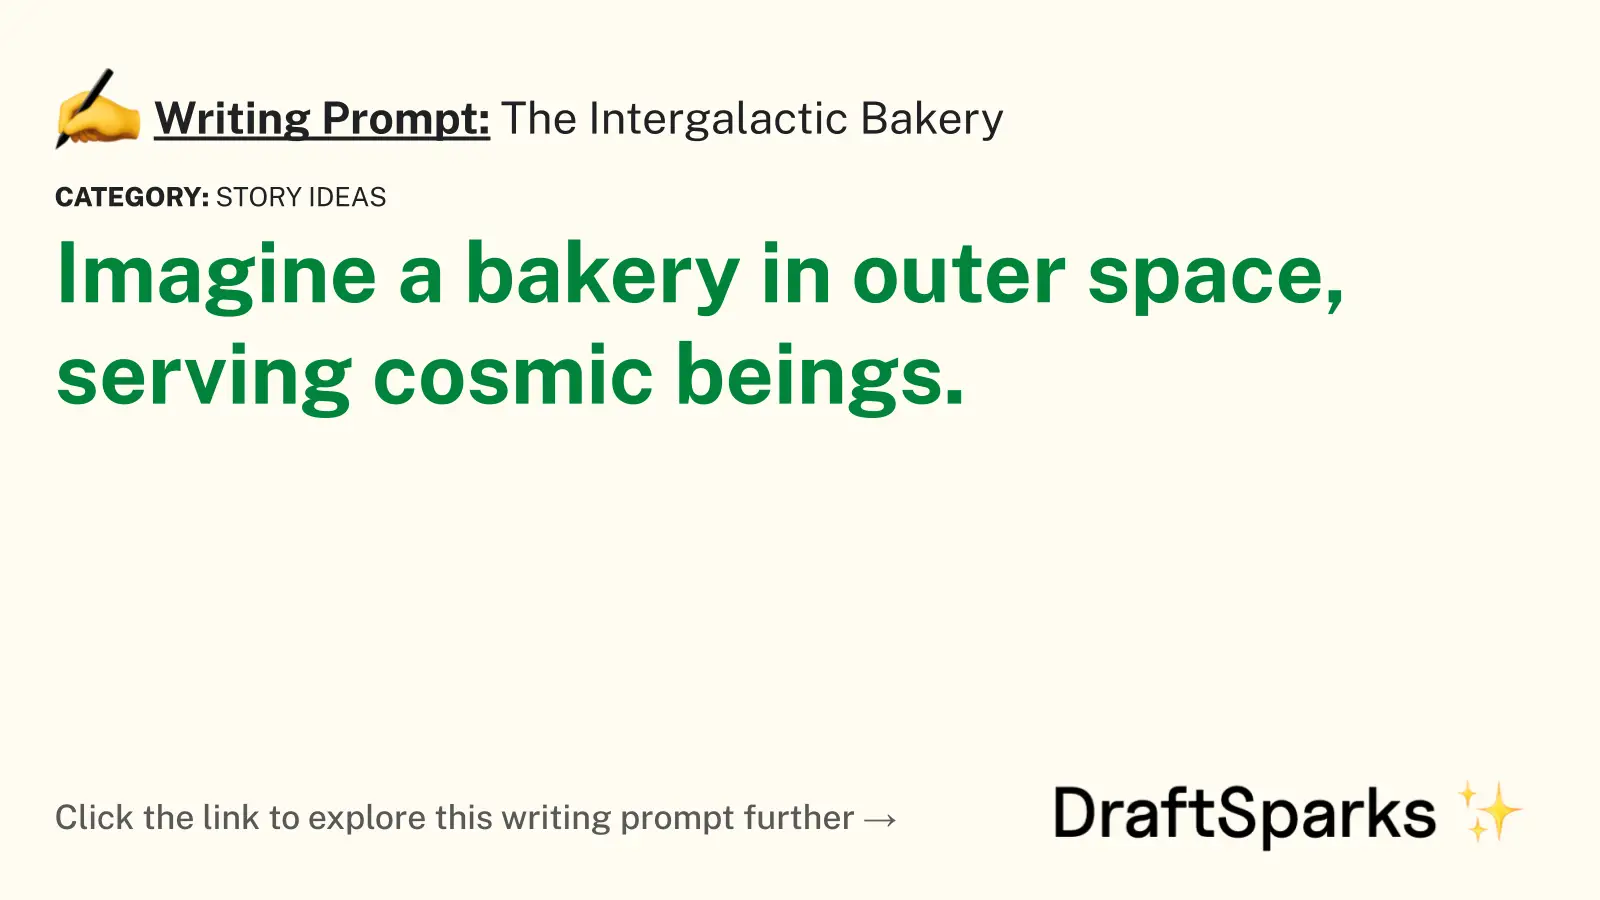 The Intergalactic Bakery